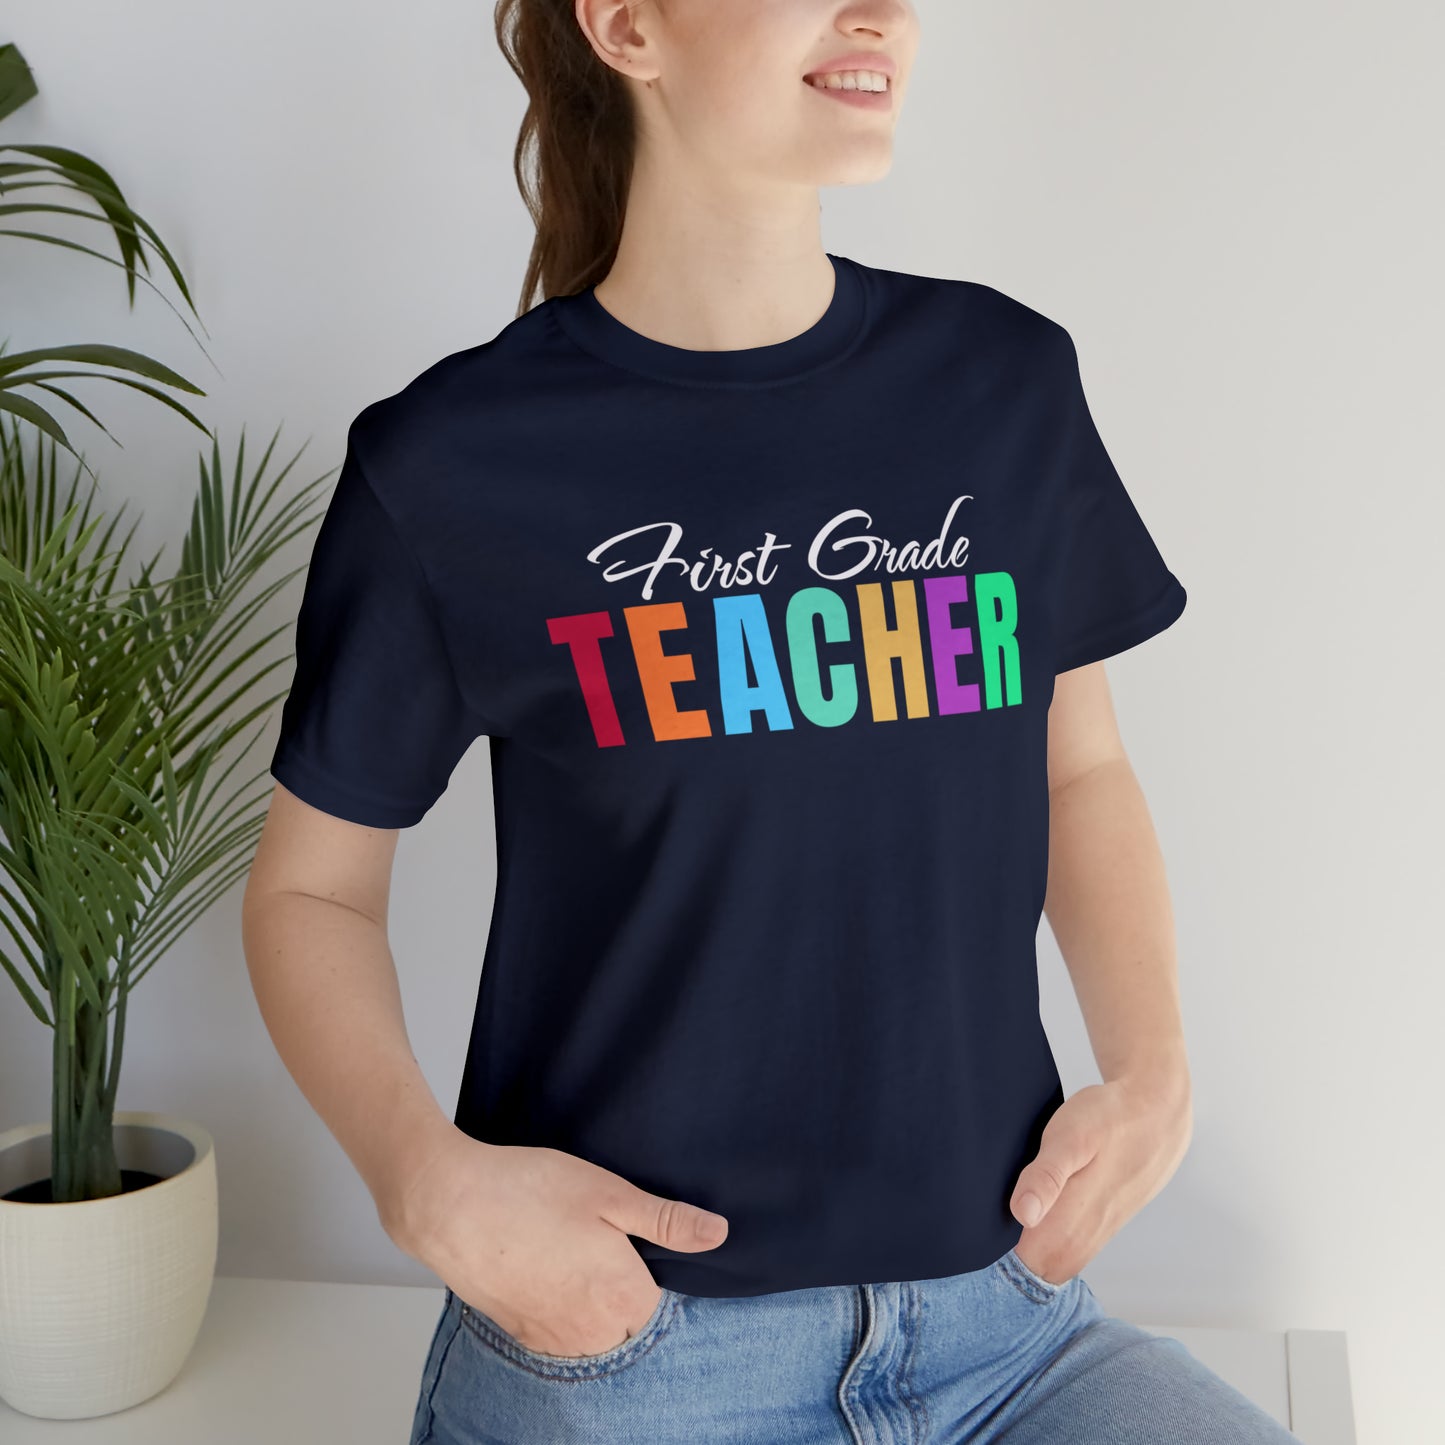 First grade teacher shirt Custom Elementary School Teacher Tshirt unique Personalized Gift for Educators and Classroom Assistant teacher tee